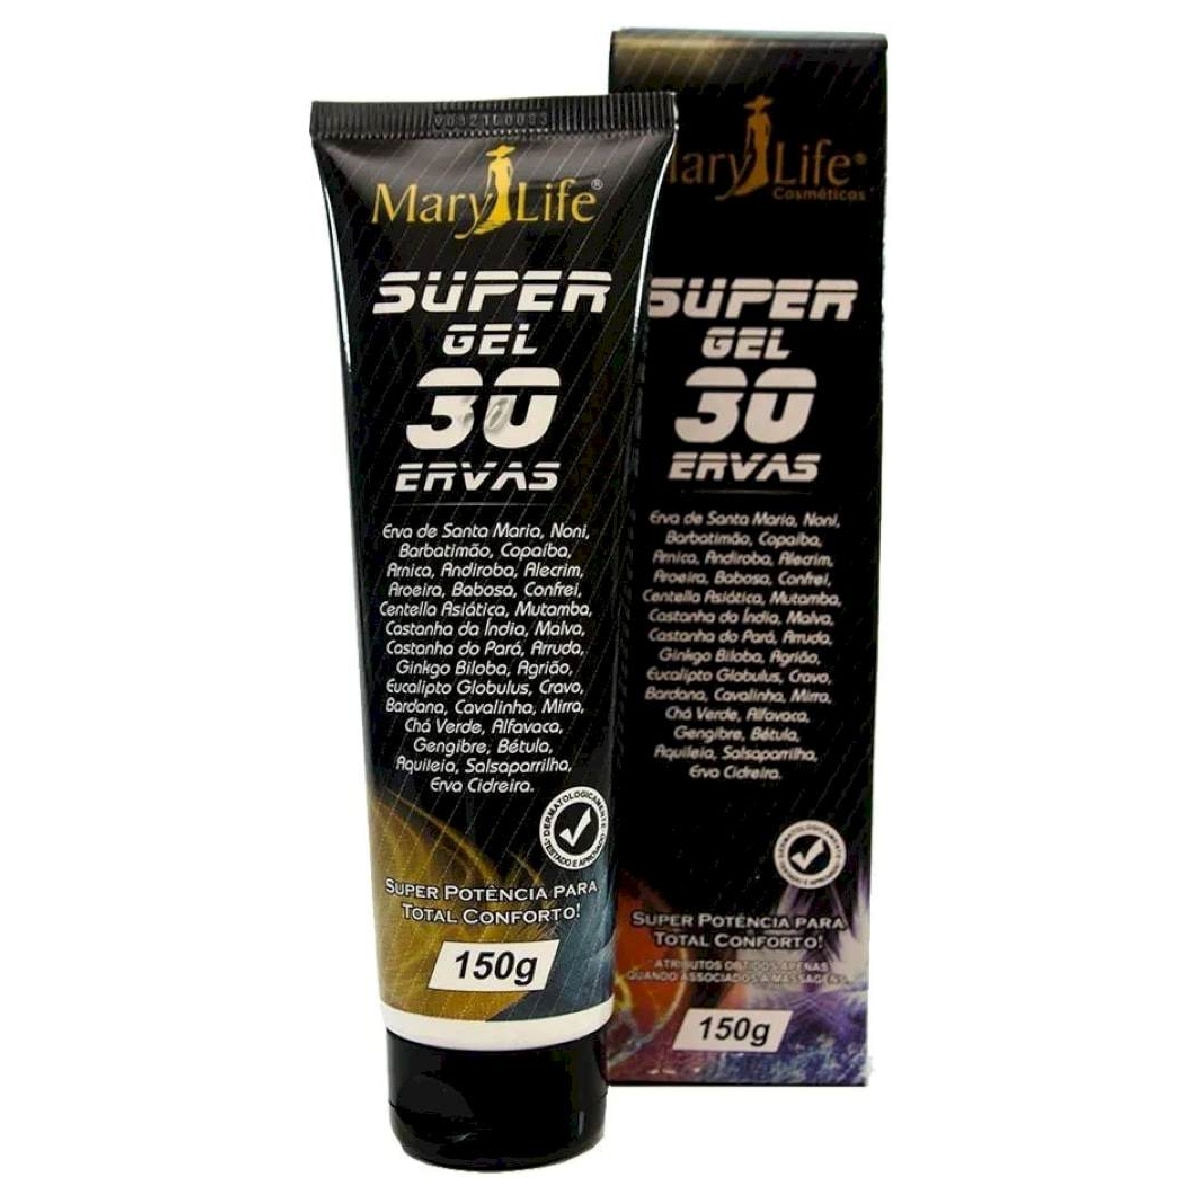 Super Gel Desodorante Massageador Mary Life 30 Ervas 150g